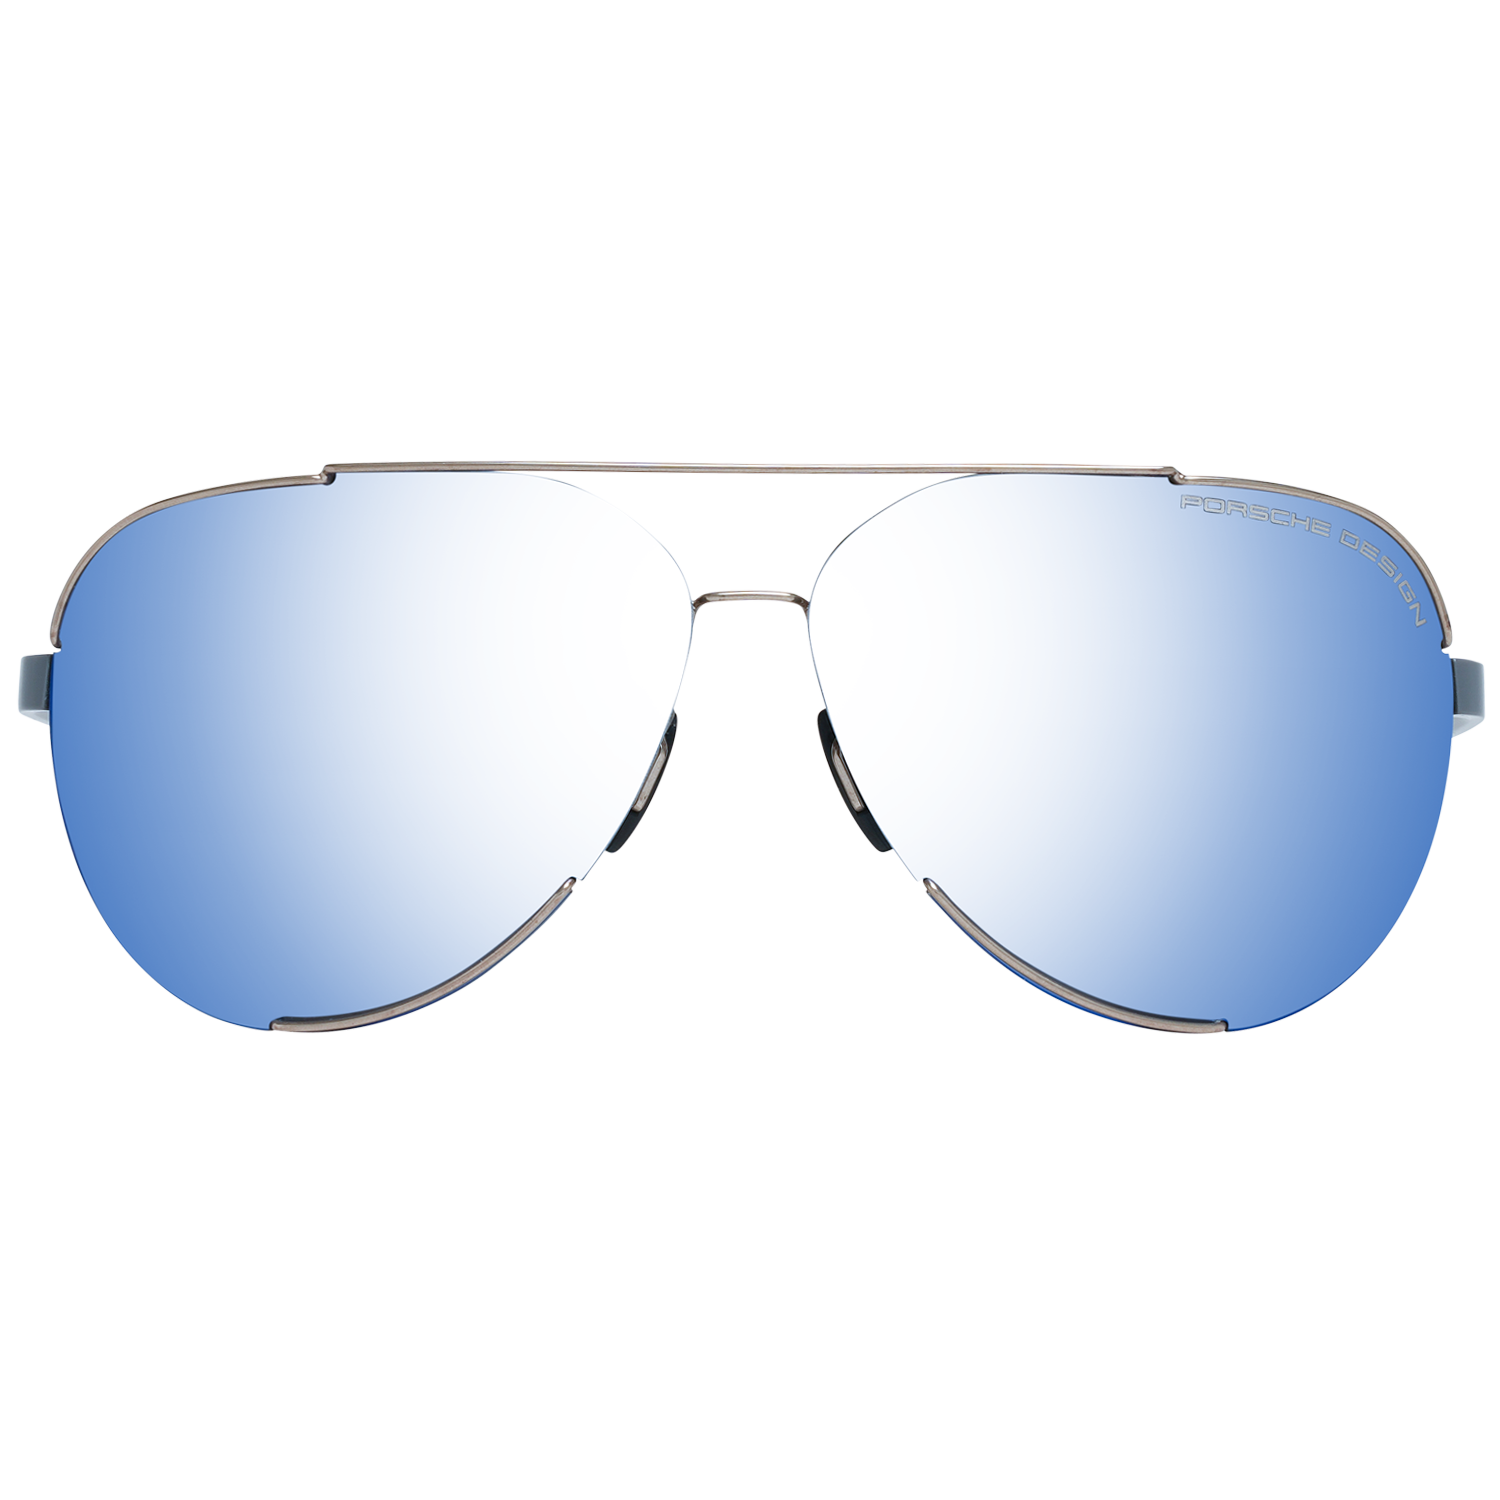 Porsche Design Sunglasses Men's Mirrored Aviator P8682 D 64